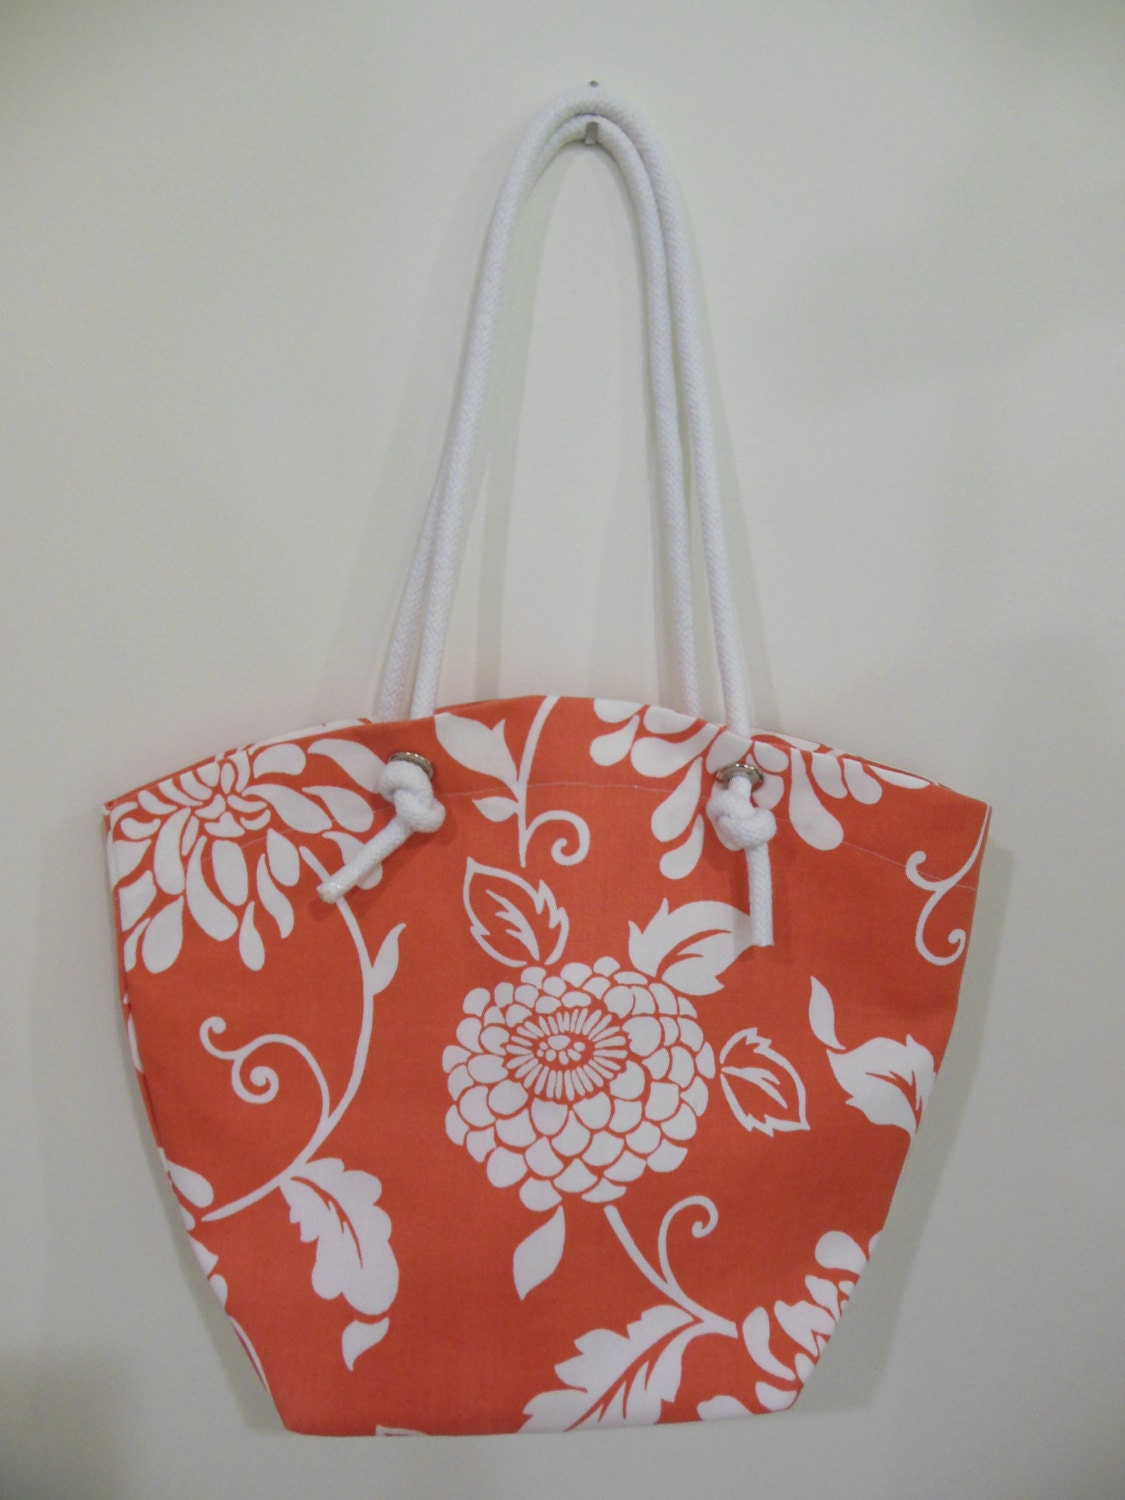 Canvas handbag pattern, shoulder bag pattern, fabric tote pattern, beach bag pattern, weekender bag, travel bag pattern - Zoia